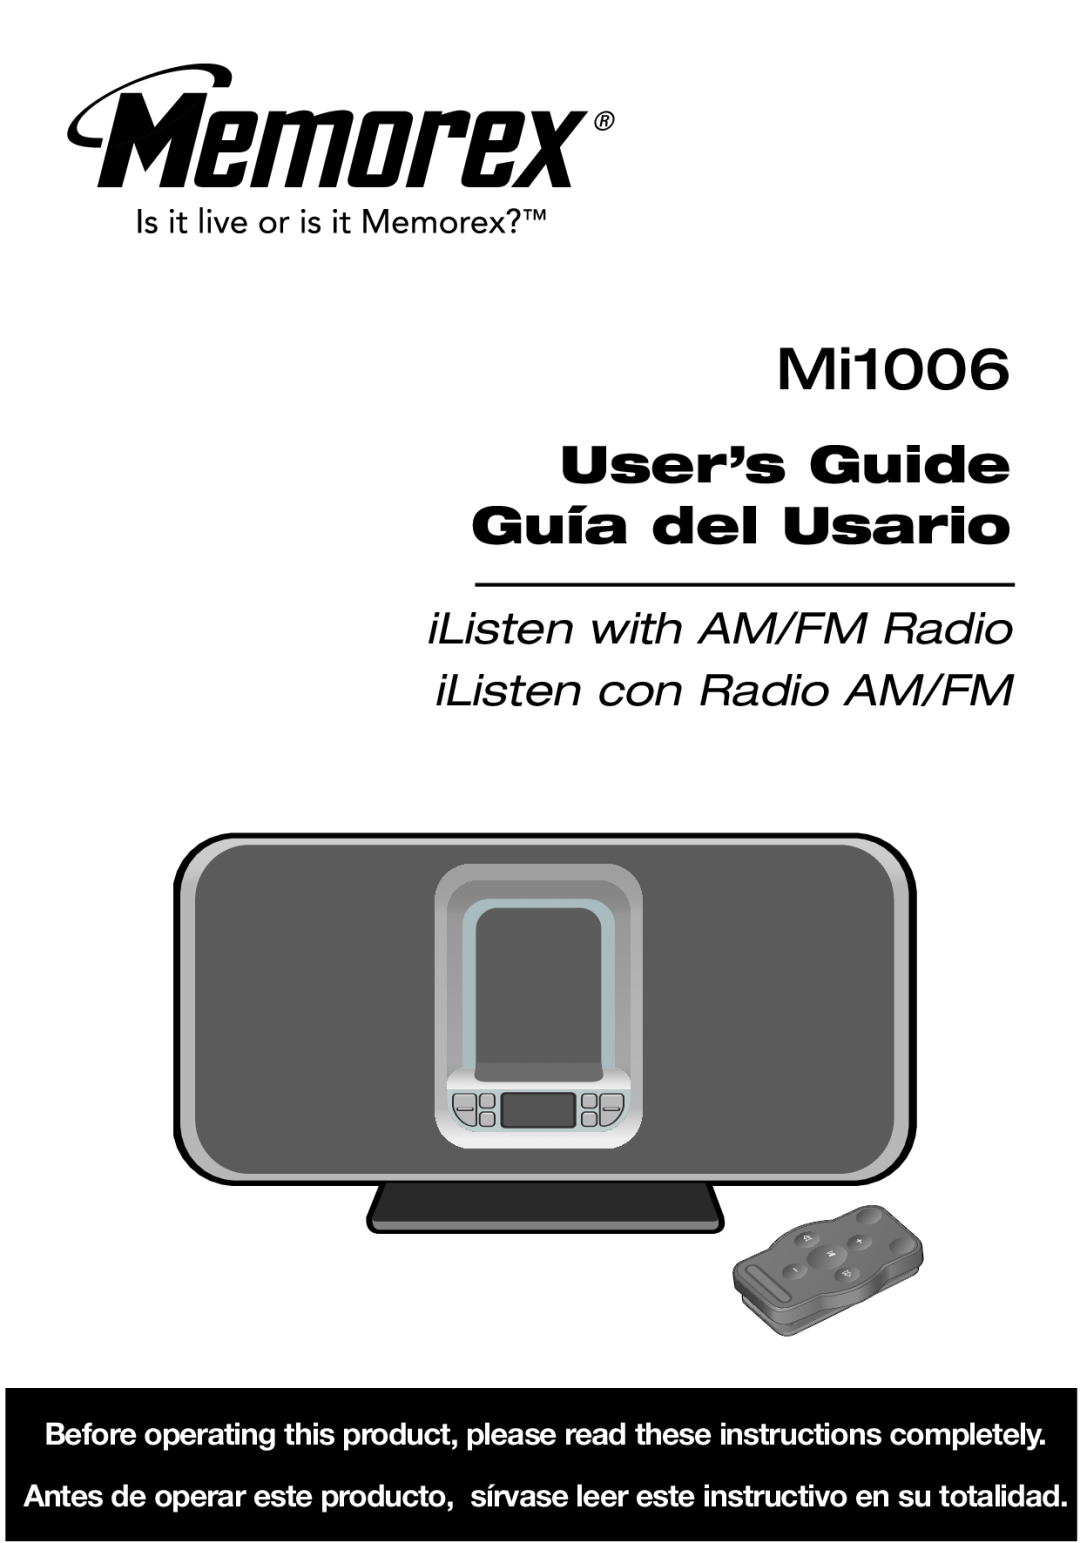 Memorex Mi1006 manual User’s Guide Guía del Usario, iListen with AM/FM Radio iListen con Radio AM/FM 